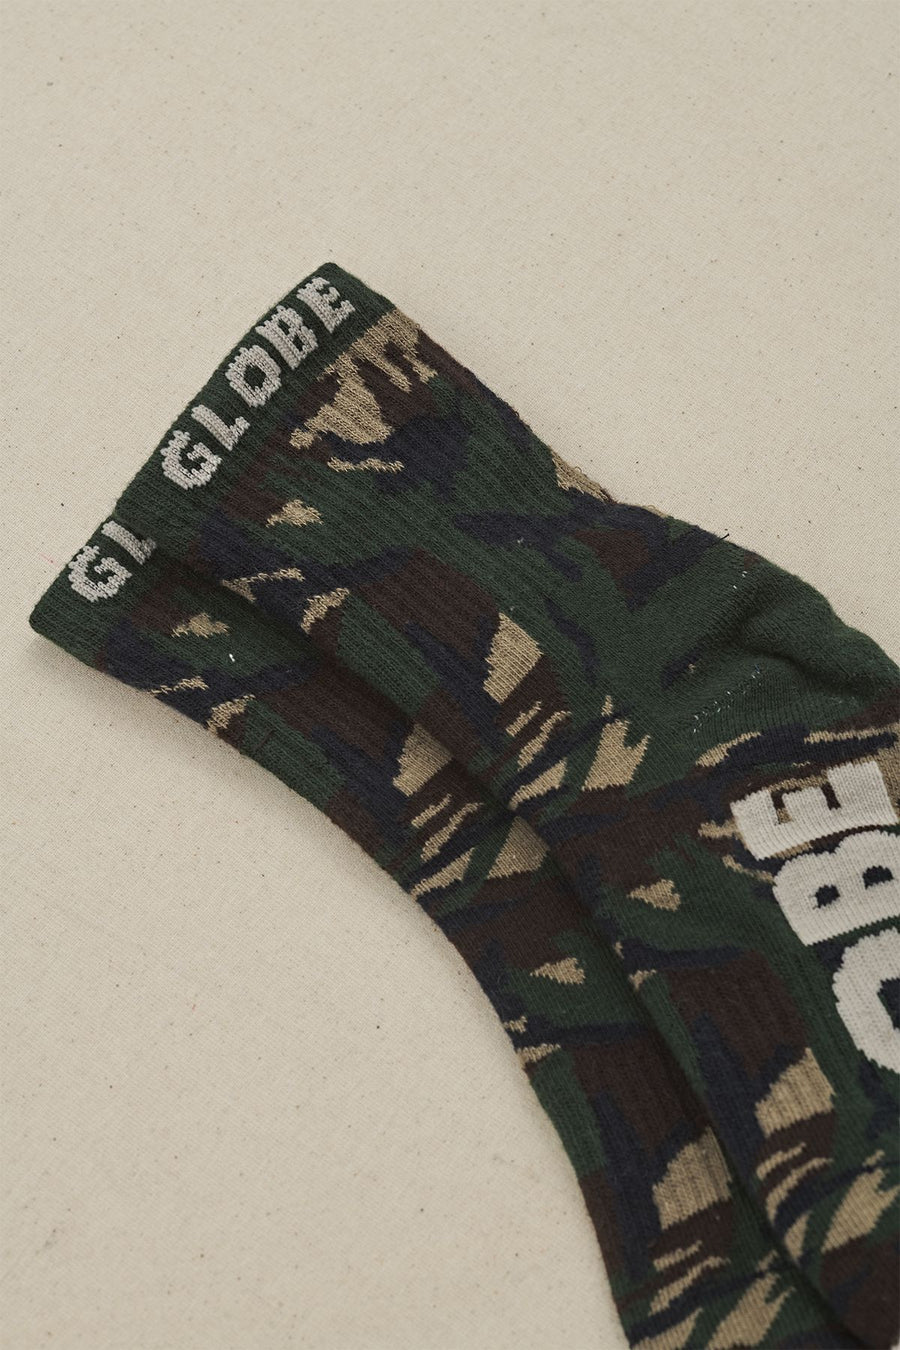 Globe Eco Crew Socks - 3 Packs Camo - [ka(:)rısma] showroom & concept store